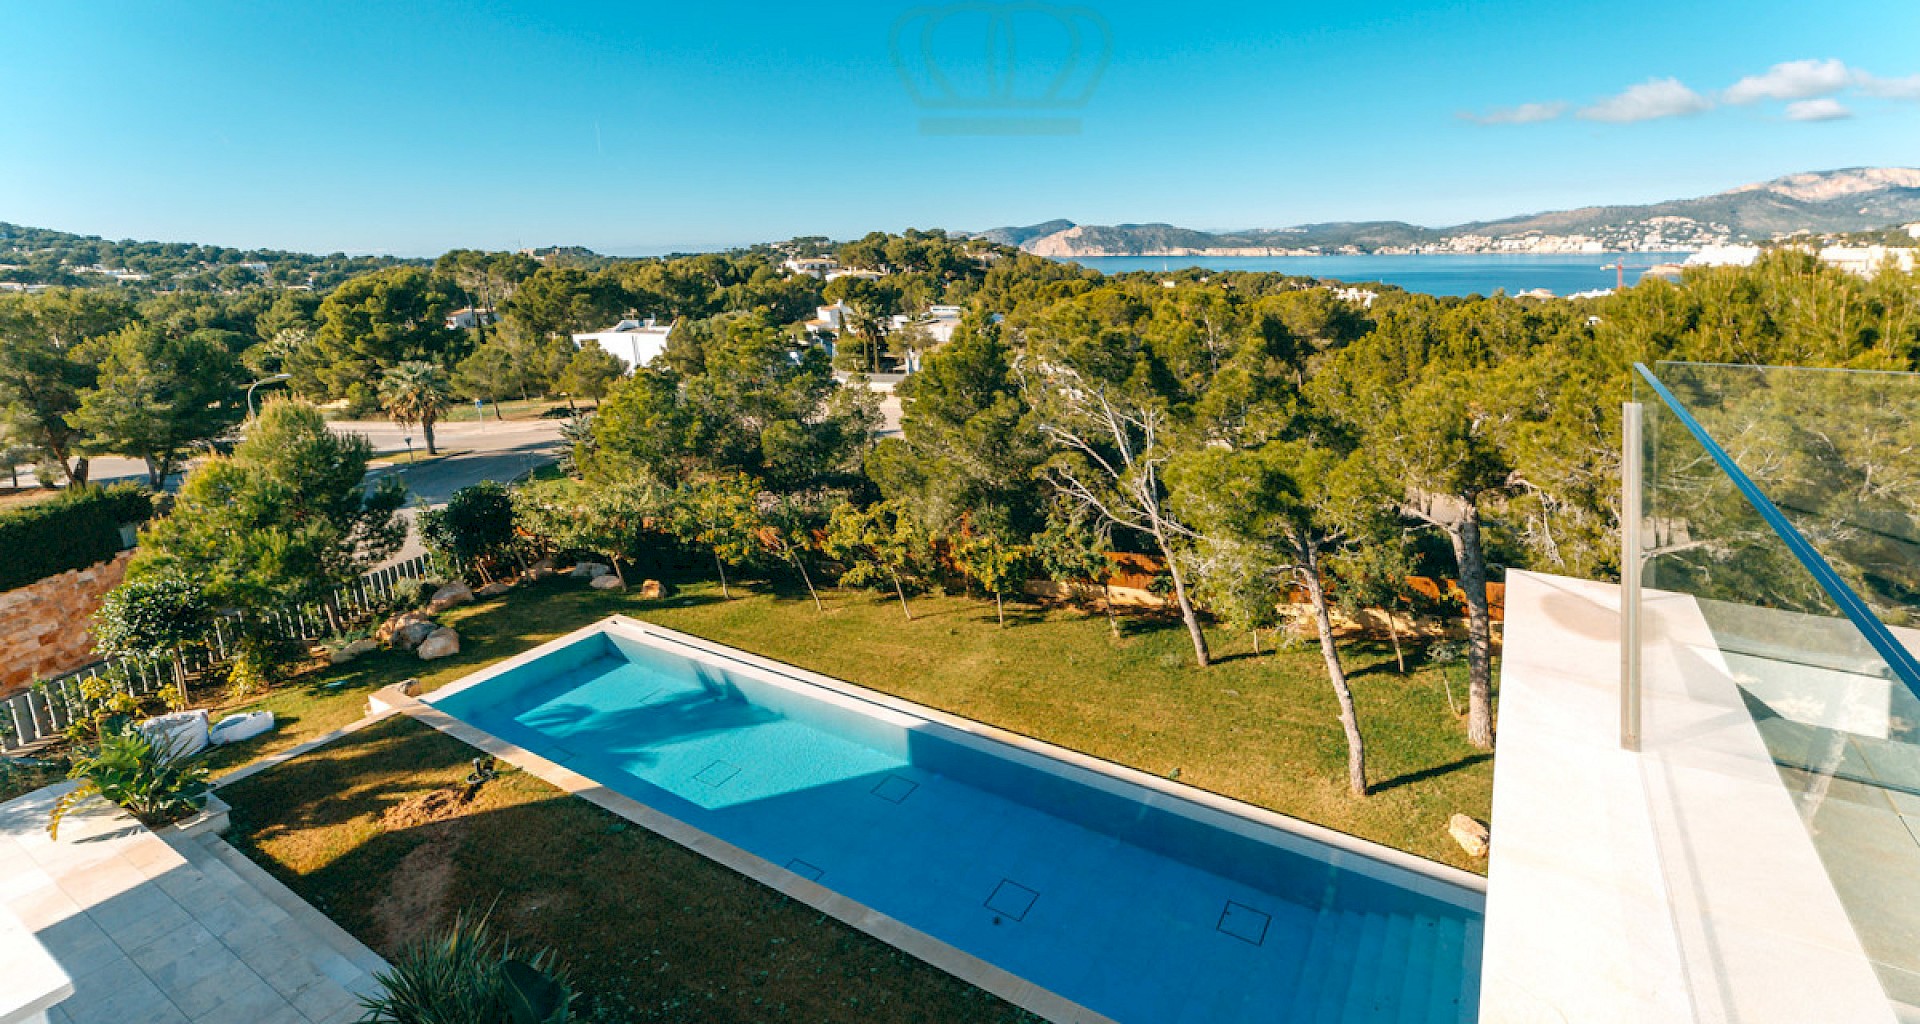 KROHN & LUEDEMANN Modern luxury new build villa in Santa Ponsa in sought after location with sea view Moderne Luxus Villa in Santa Ponsa 25